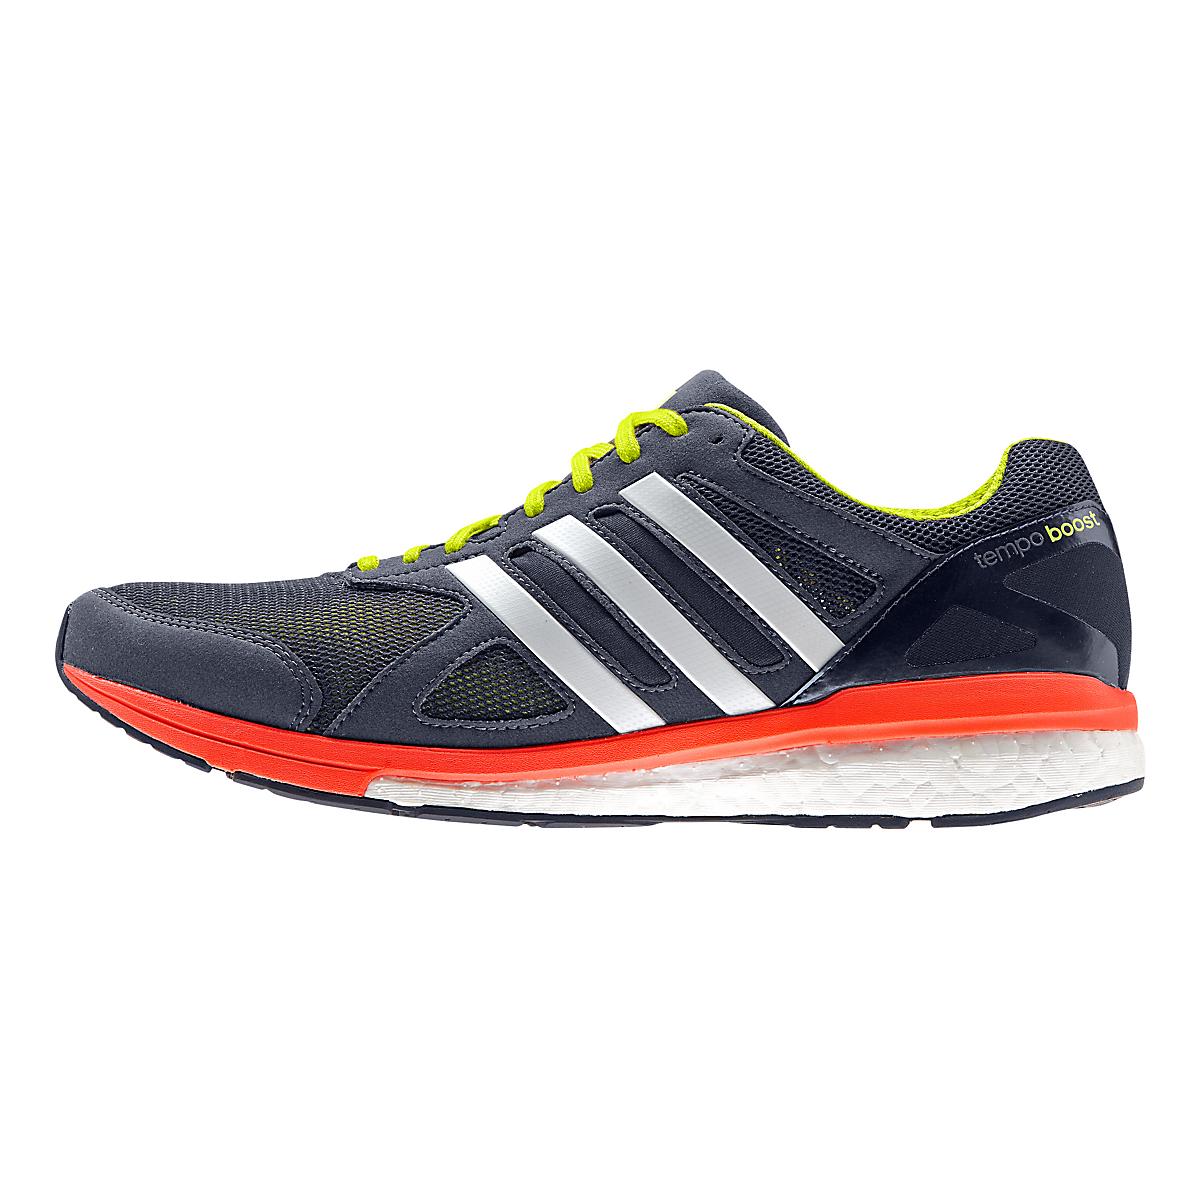 Mens adidas Adizero Tempo 7 Boost Running Shoe at Road Runner Sports